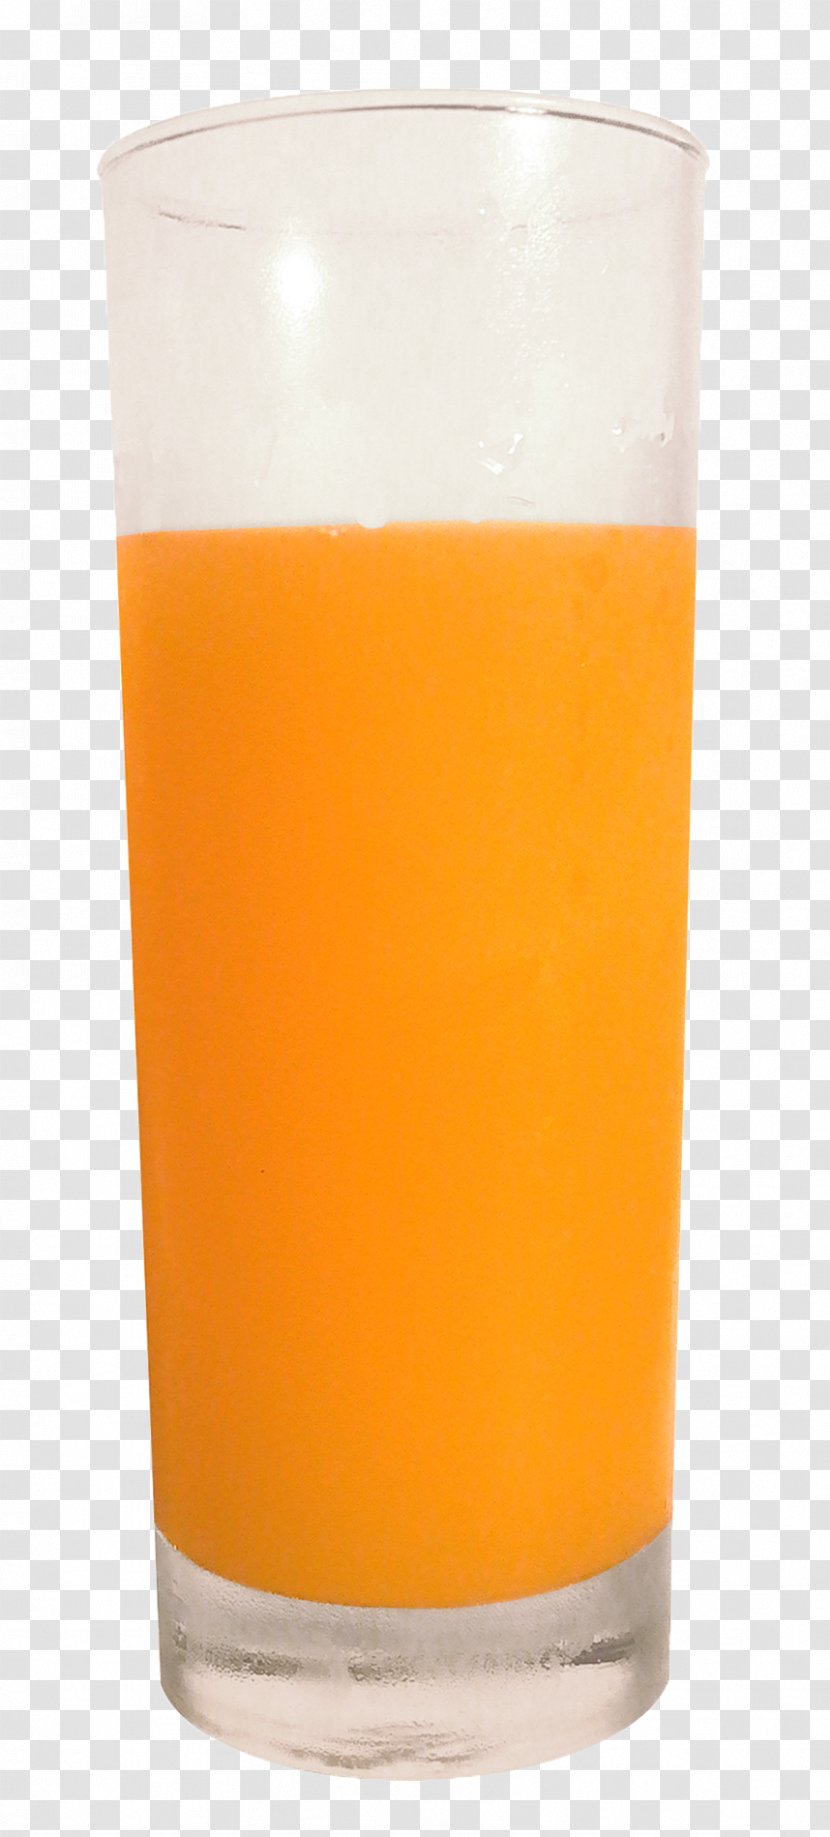 Orange Juice Tomato Soft Drink Harvey Wallbanger - A Glass Of Transparent PNG